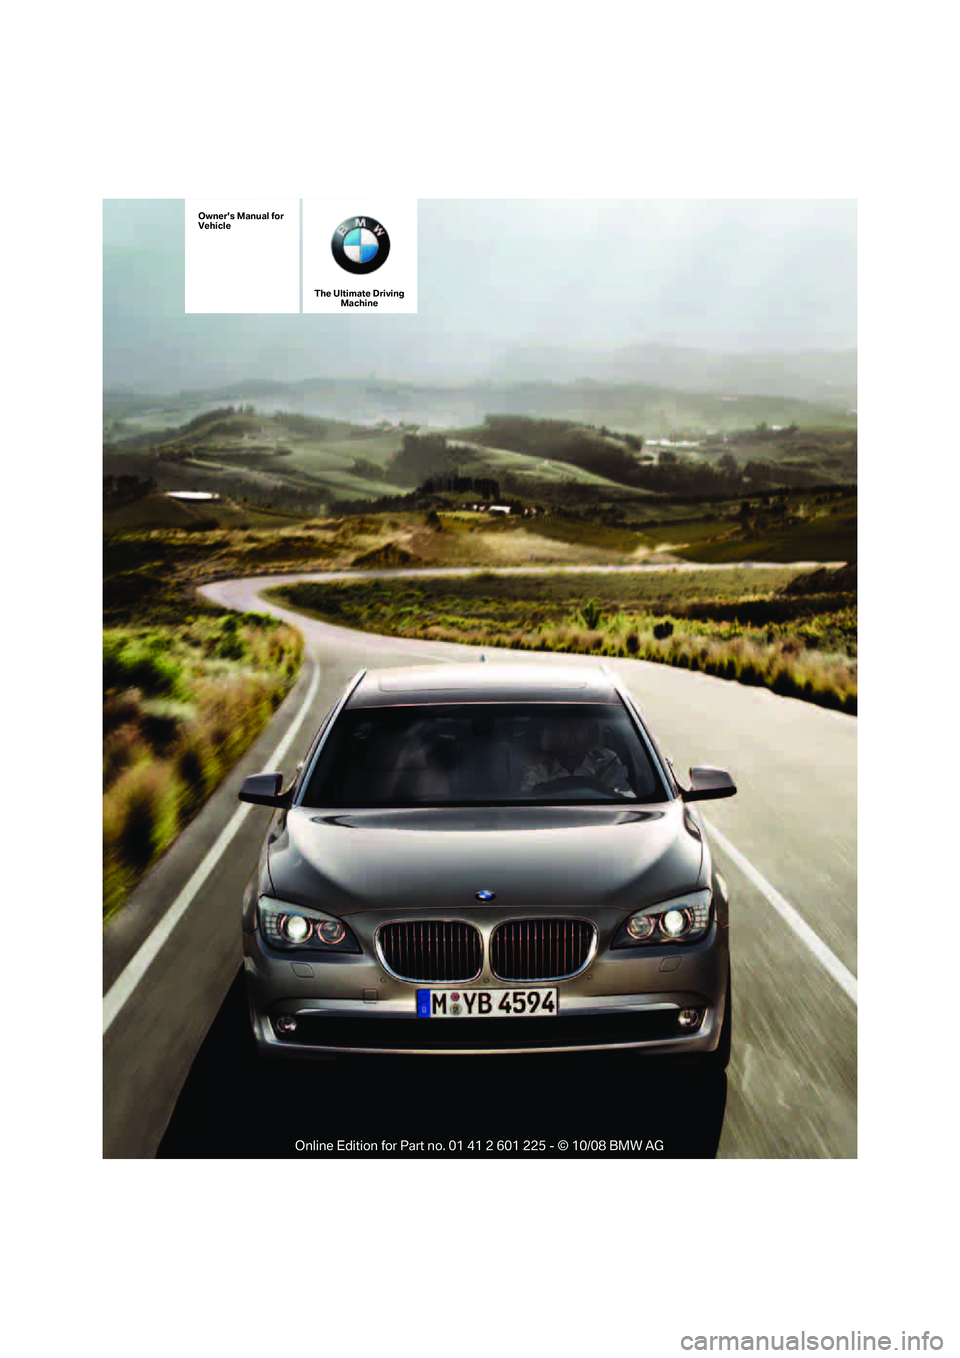 BMW 750LI 2009  Owners Manual �5�I�F��6�M�U�J�N�B�U�F��%�S�J�W�J�O�H�.�B�D�I�J�O�F
�0�X�O�F�S��T��.�B�O�V�B�M��G�P�S
�7�F�I�J�D�M�F
Online Edition for Part no. 01 41 2 601 225 - © 10/08 BMW AG 